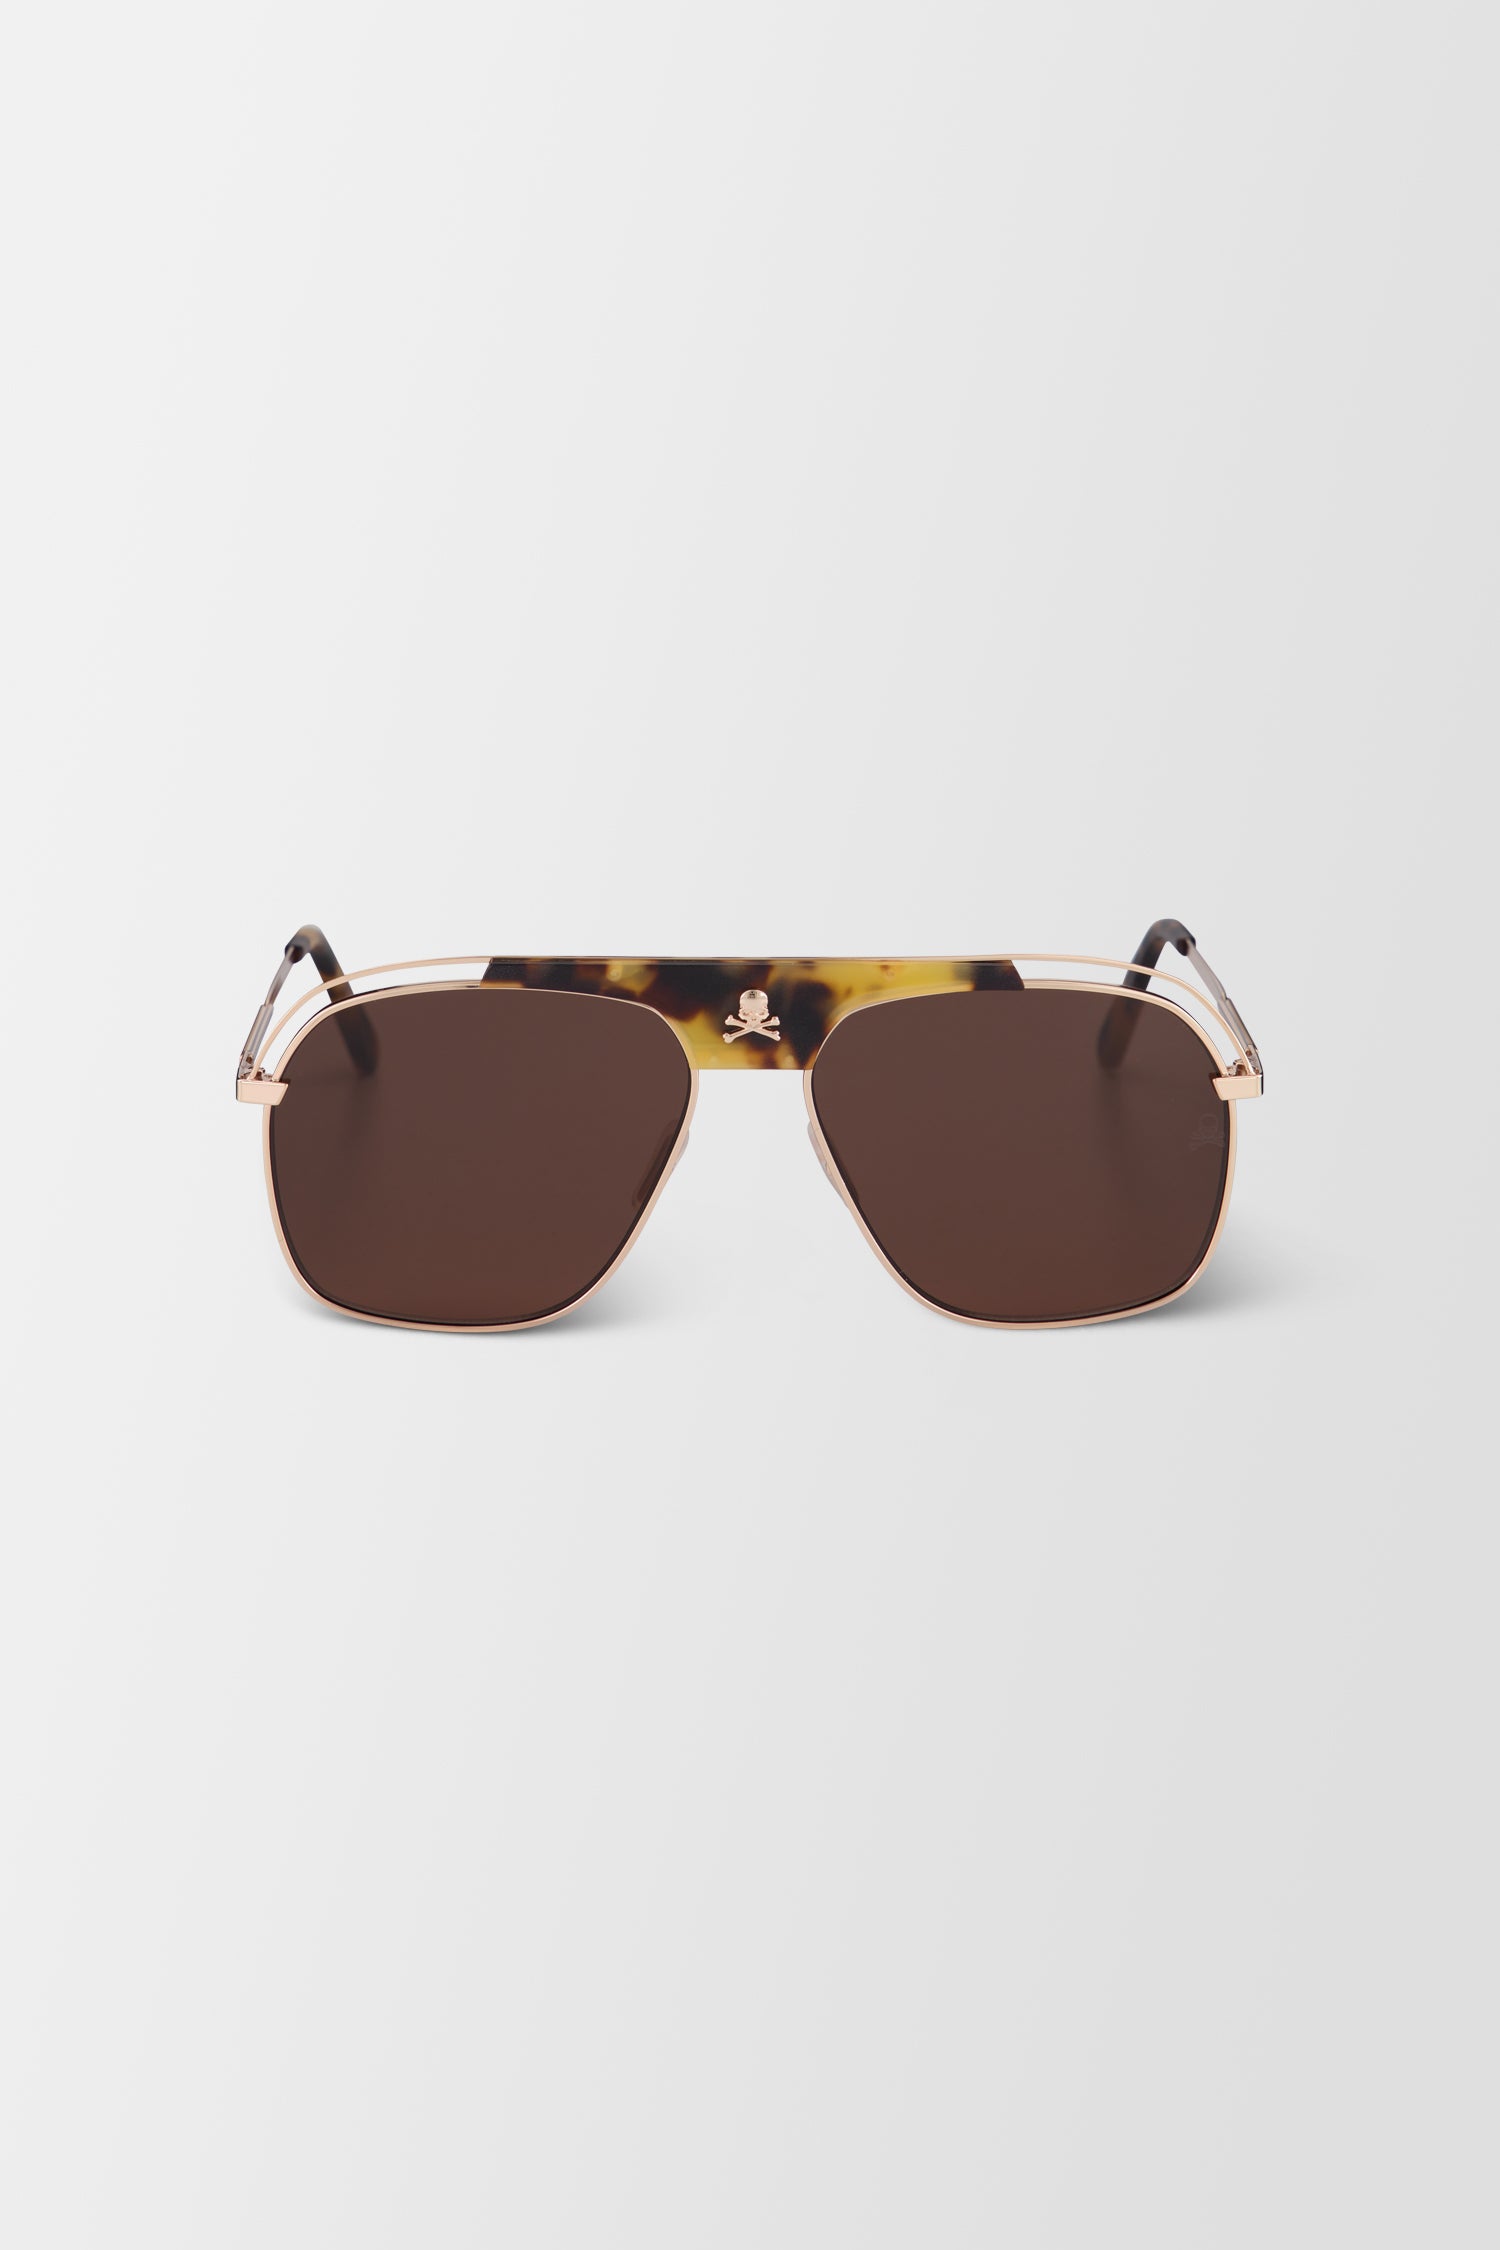 Philipp Plein Noah Basic Sunglasses